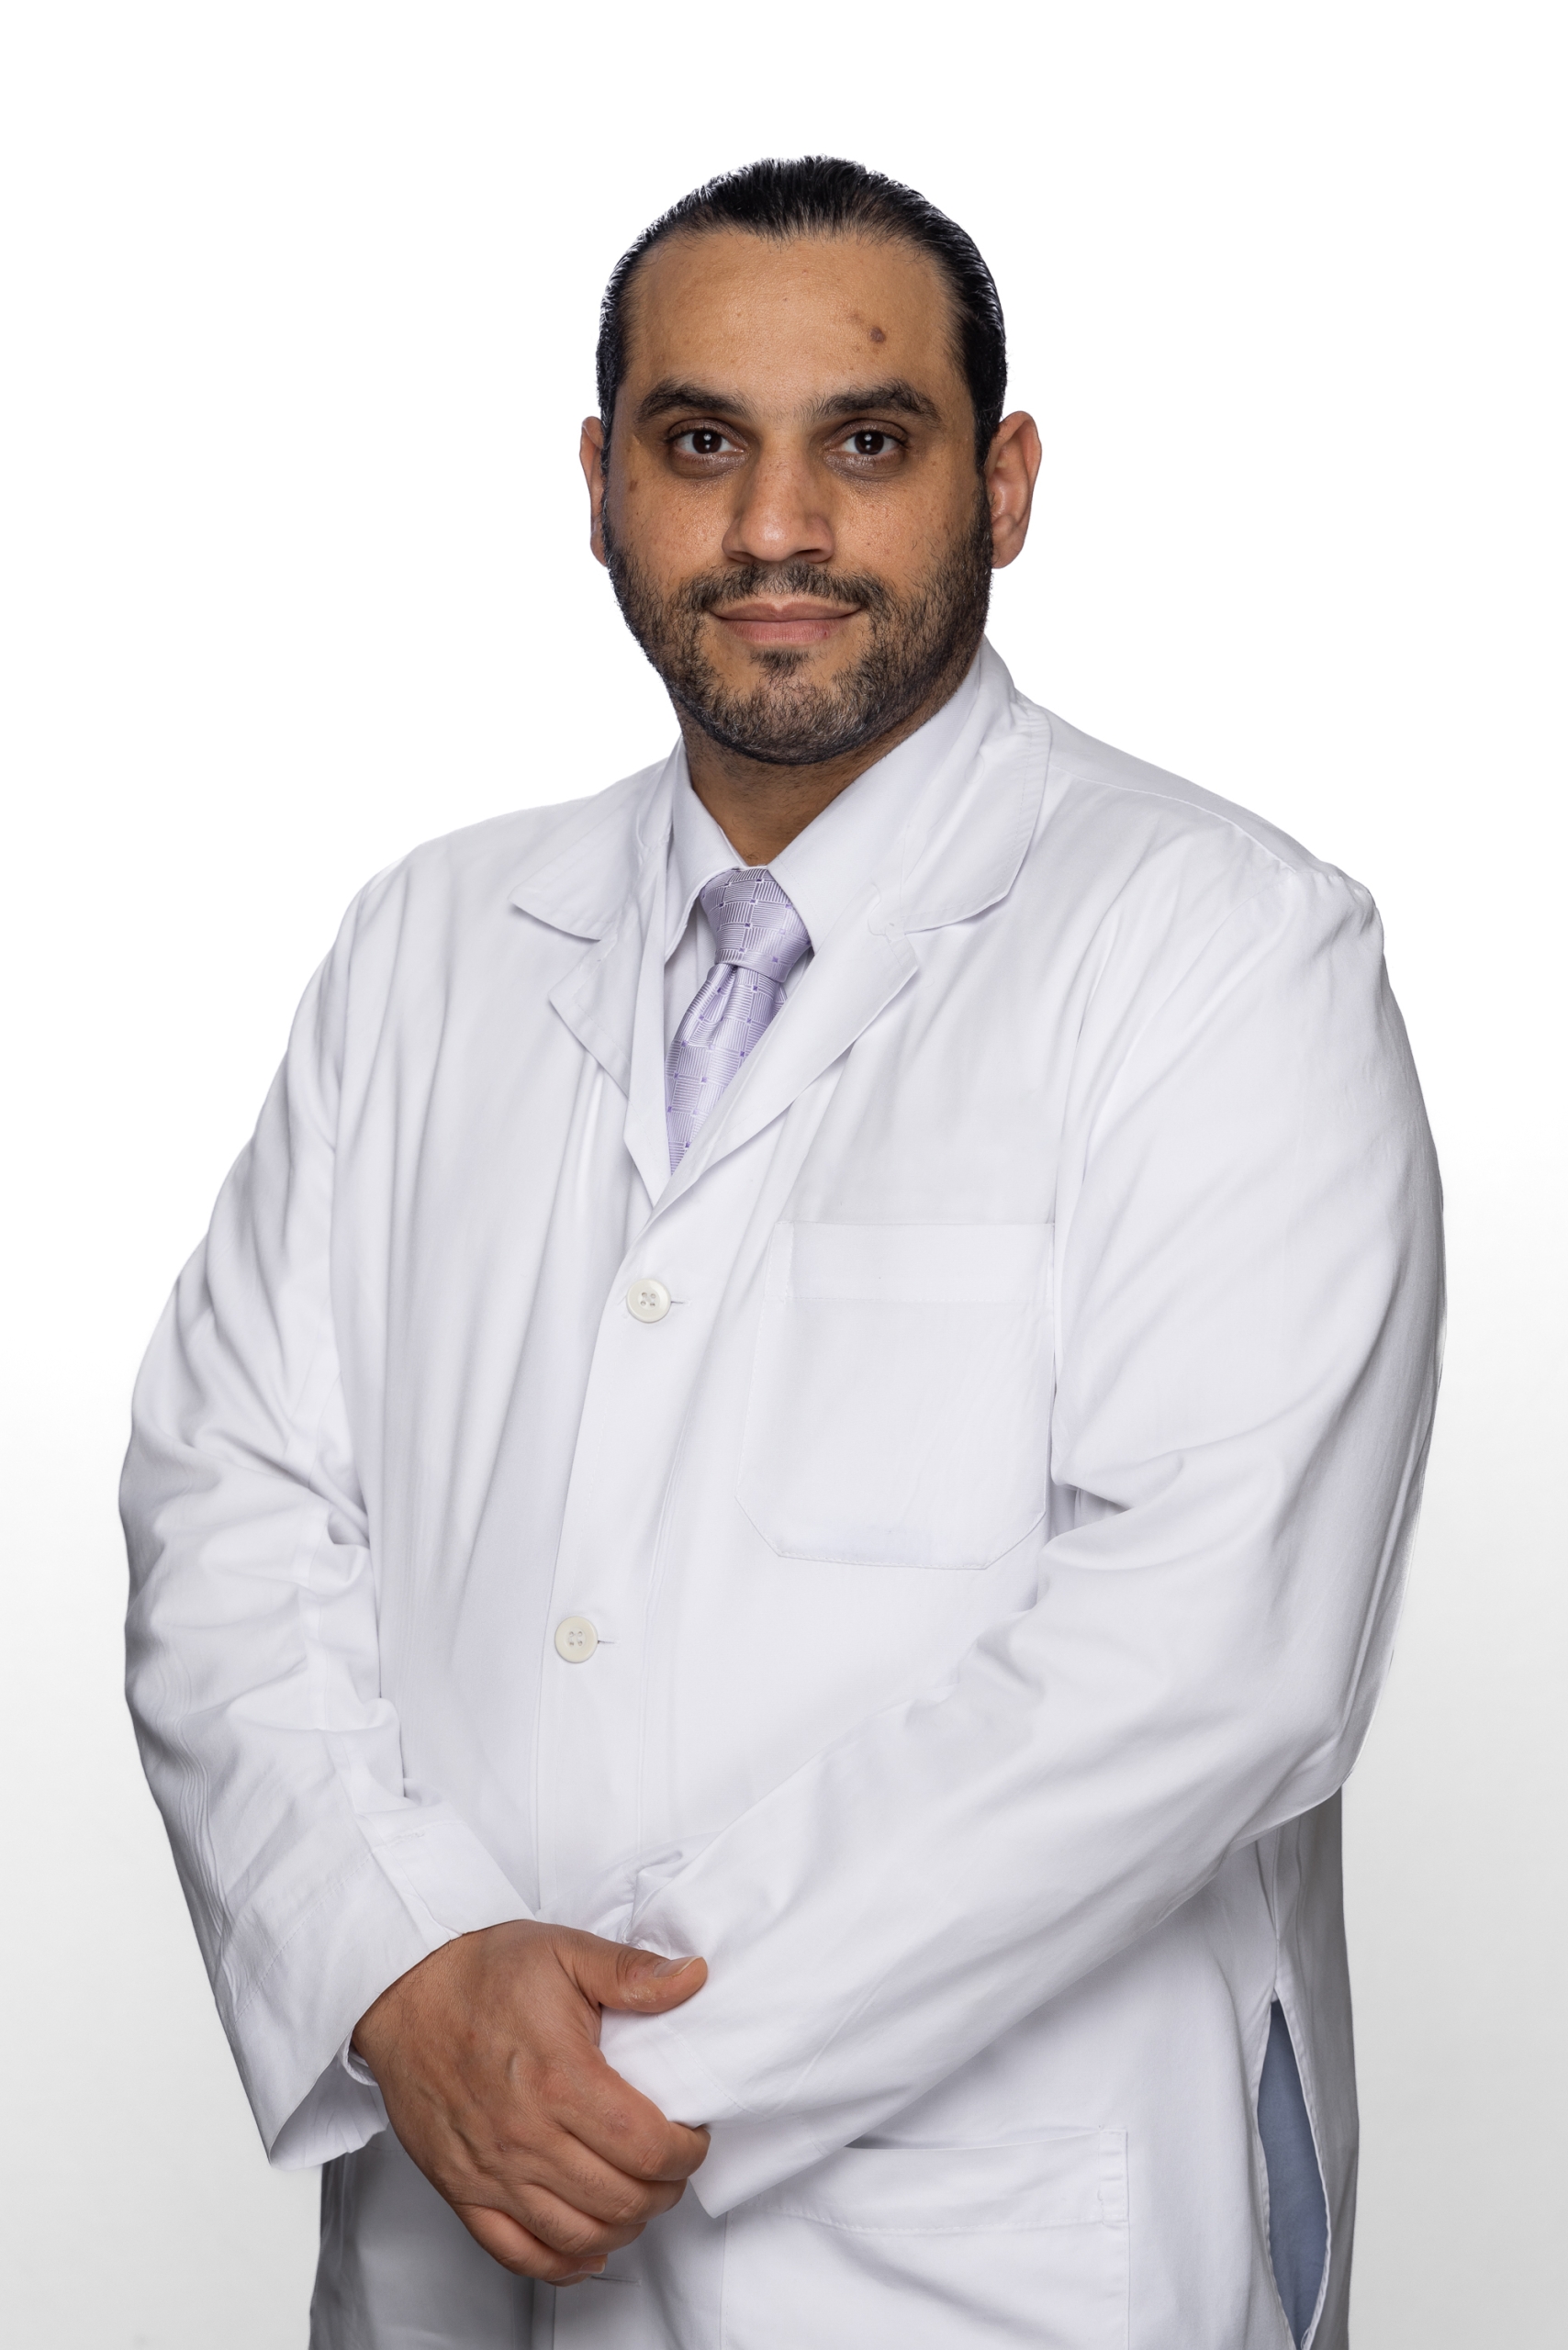 Dr. Yousef Abdulkhaleq Dhuhair